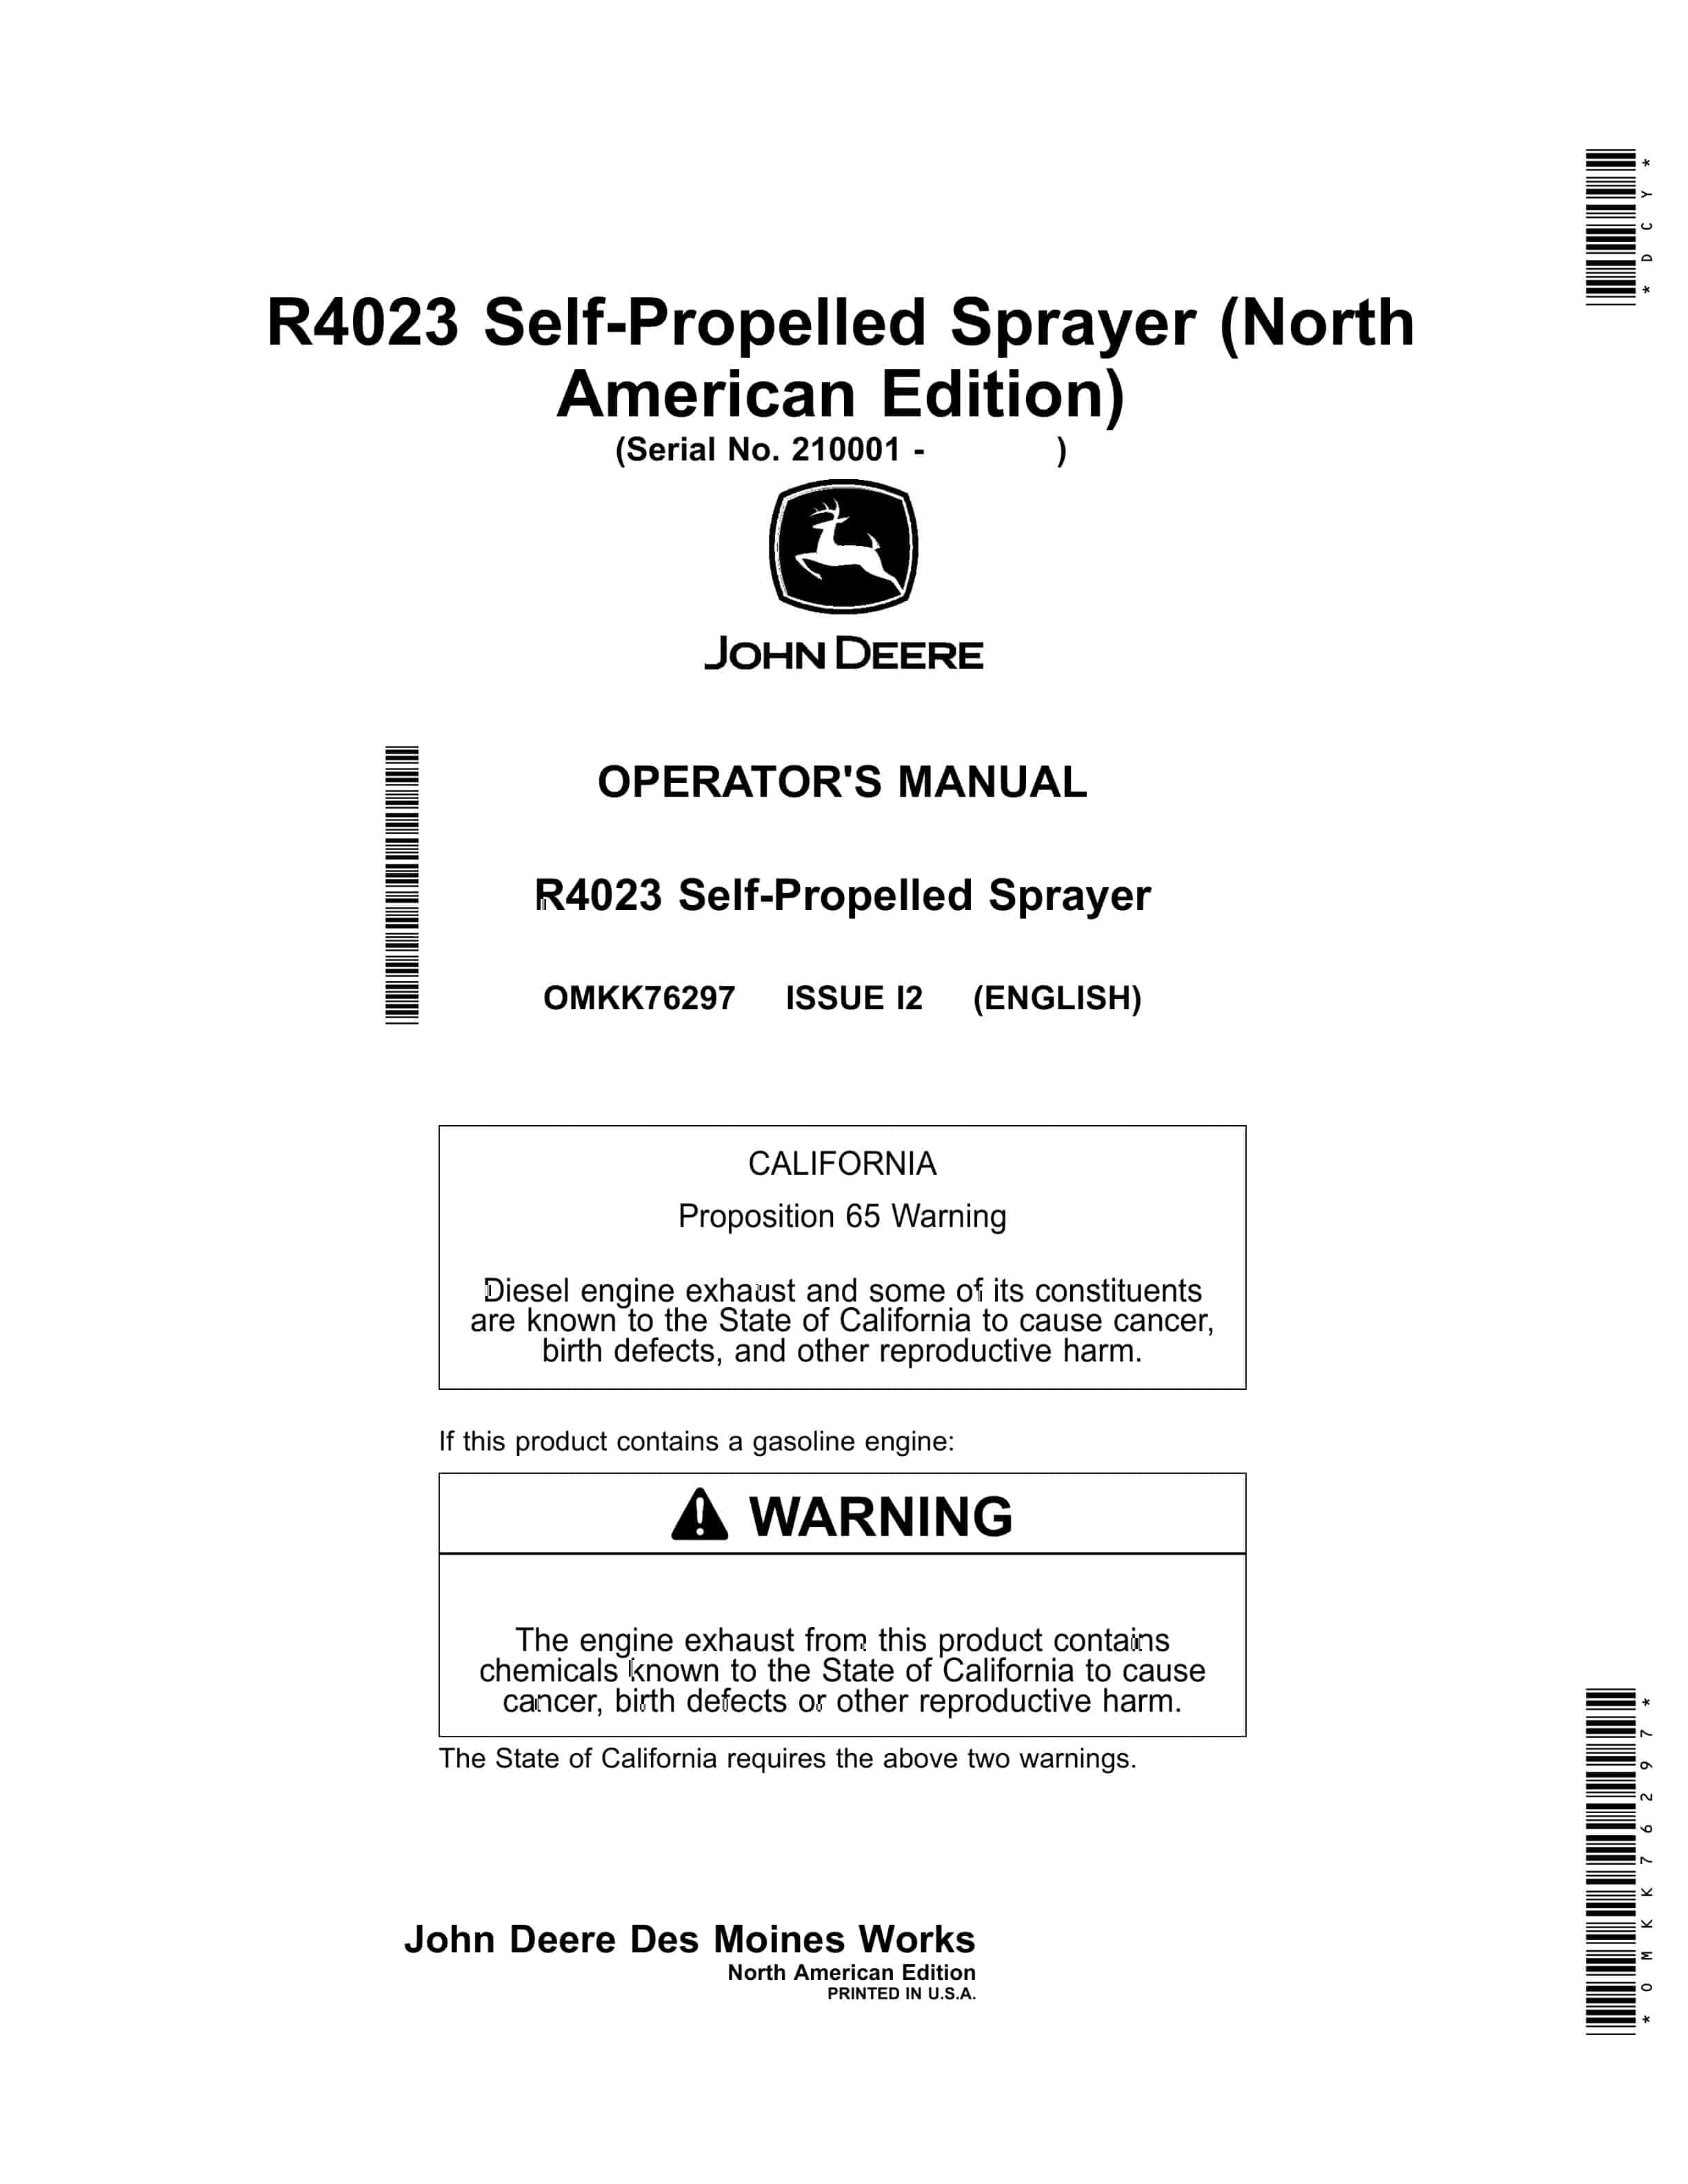 John Deere R4023 Self Propelled Sprayer Operator Manual OMKK76297 1